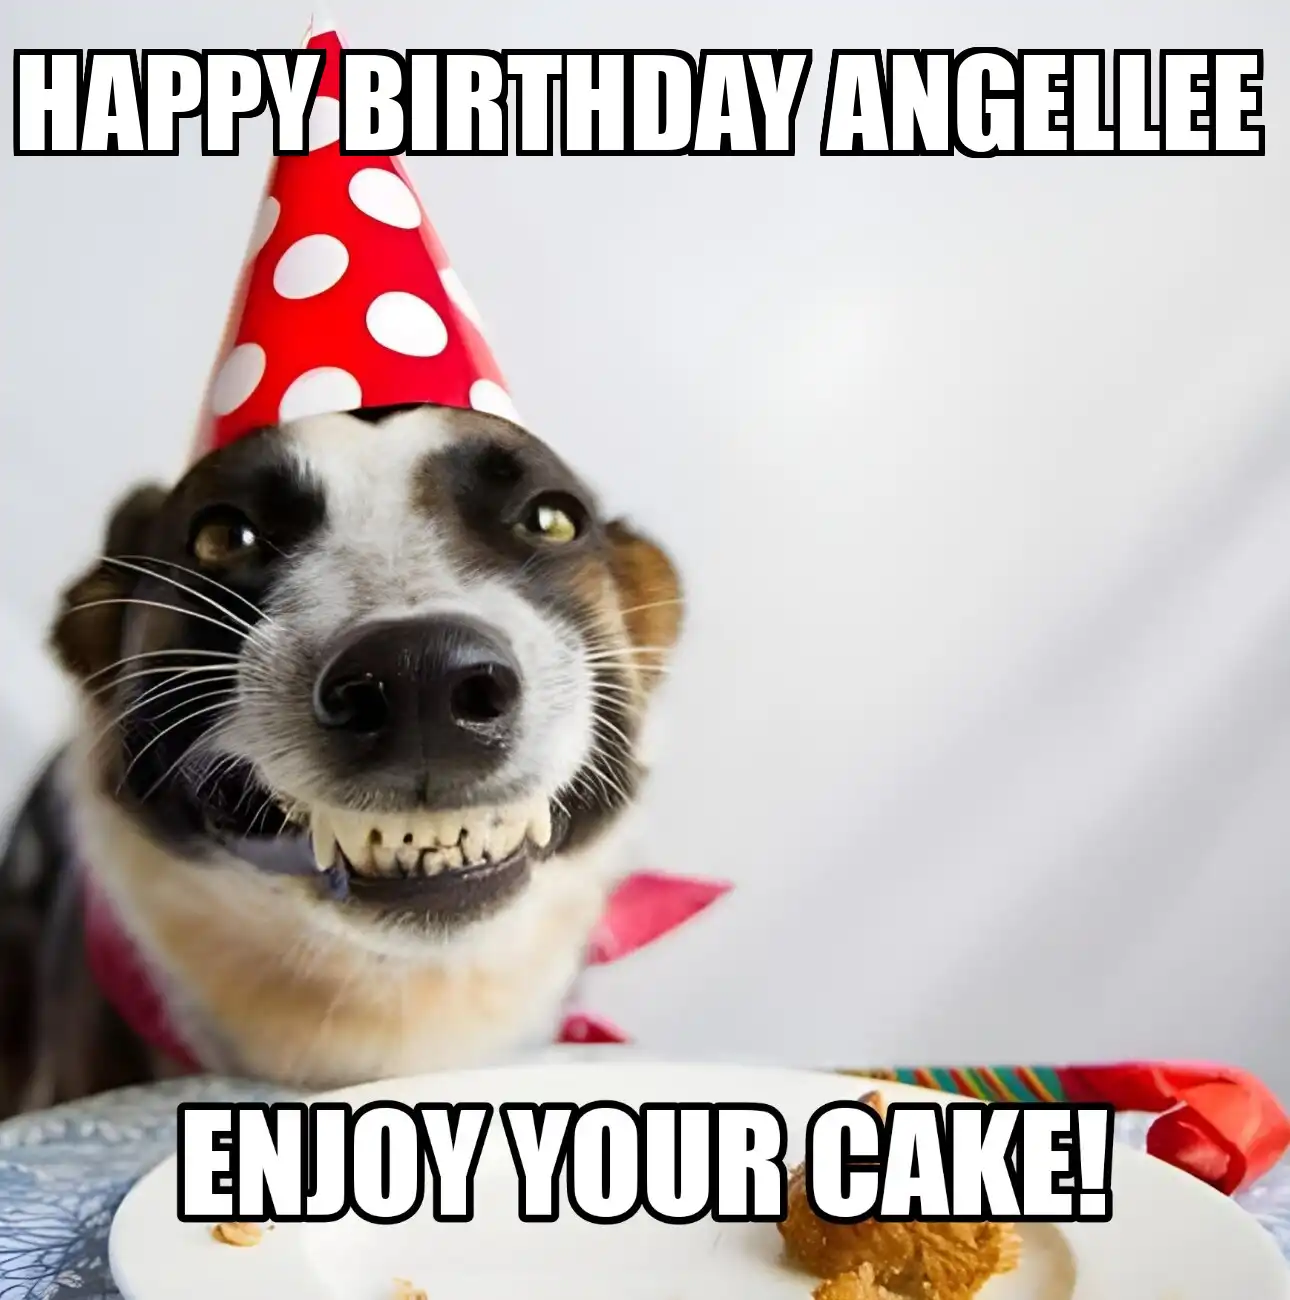 Happy Birthday Angellee Enjoy Your Cake Dog Meme